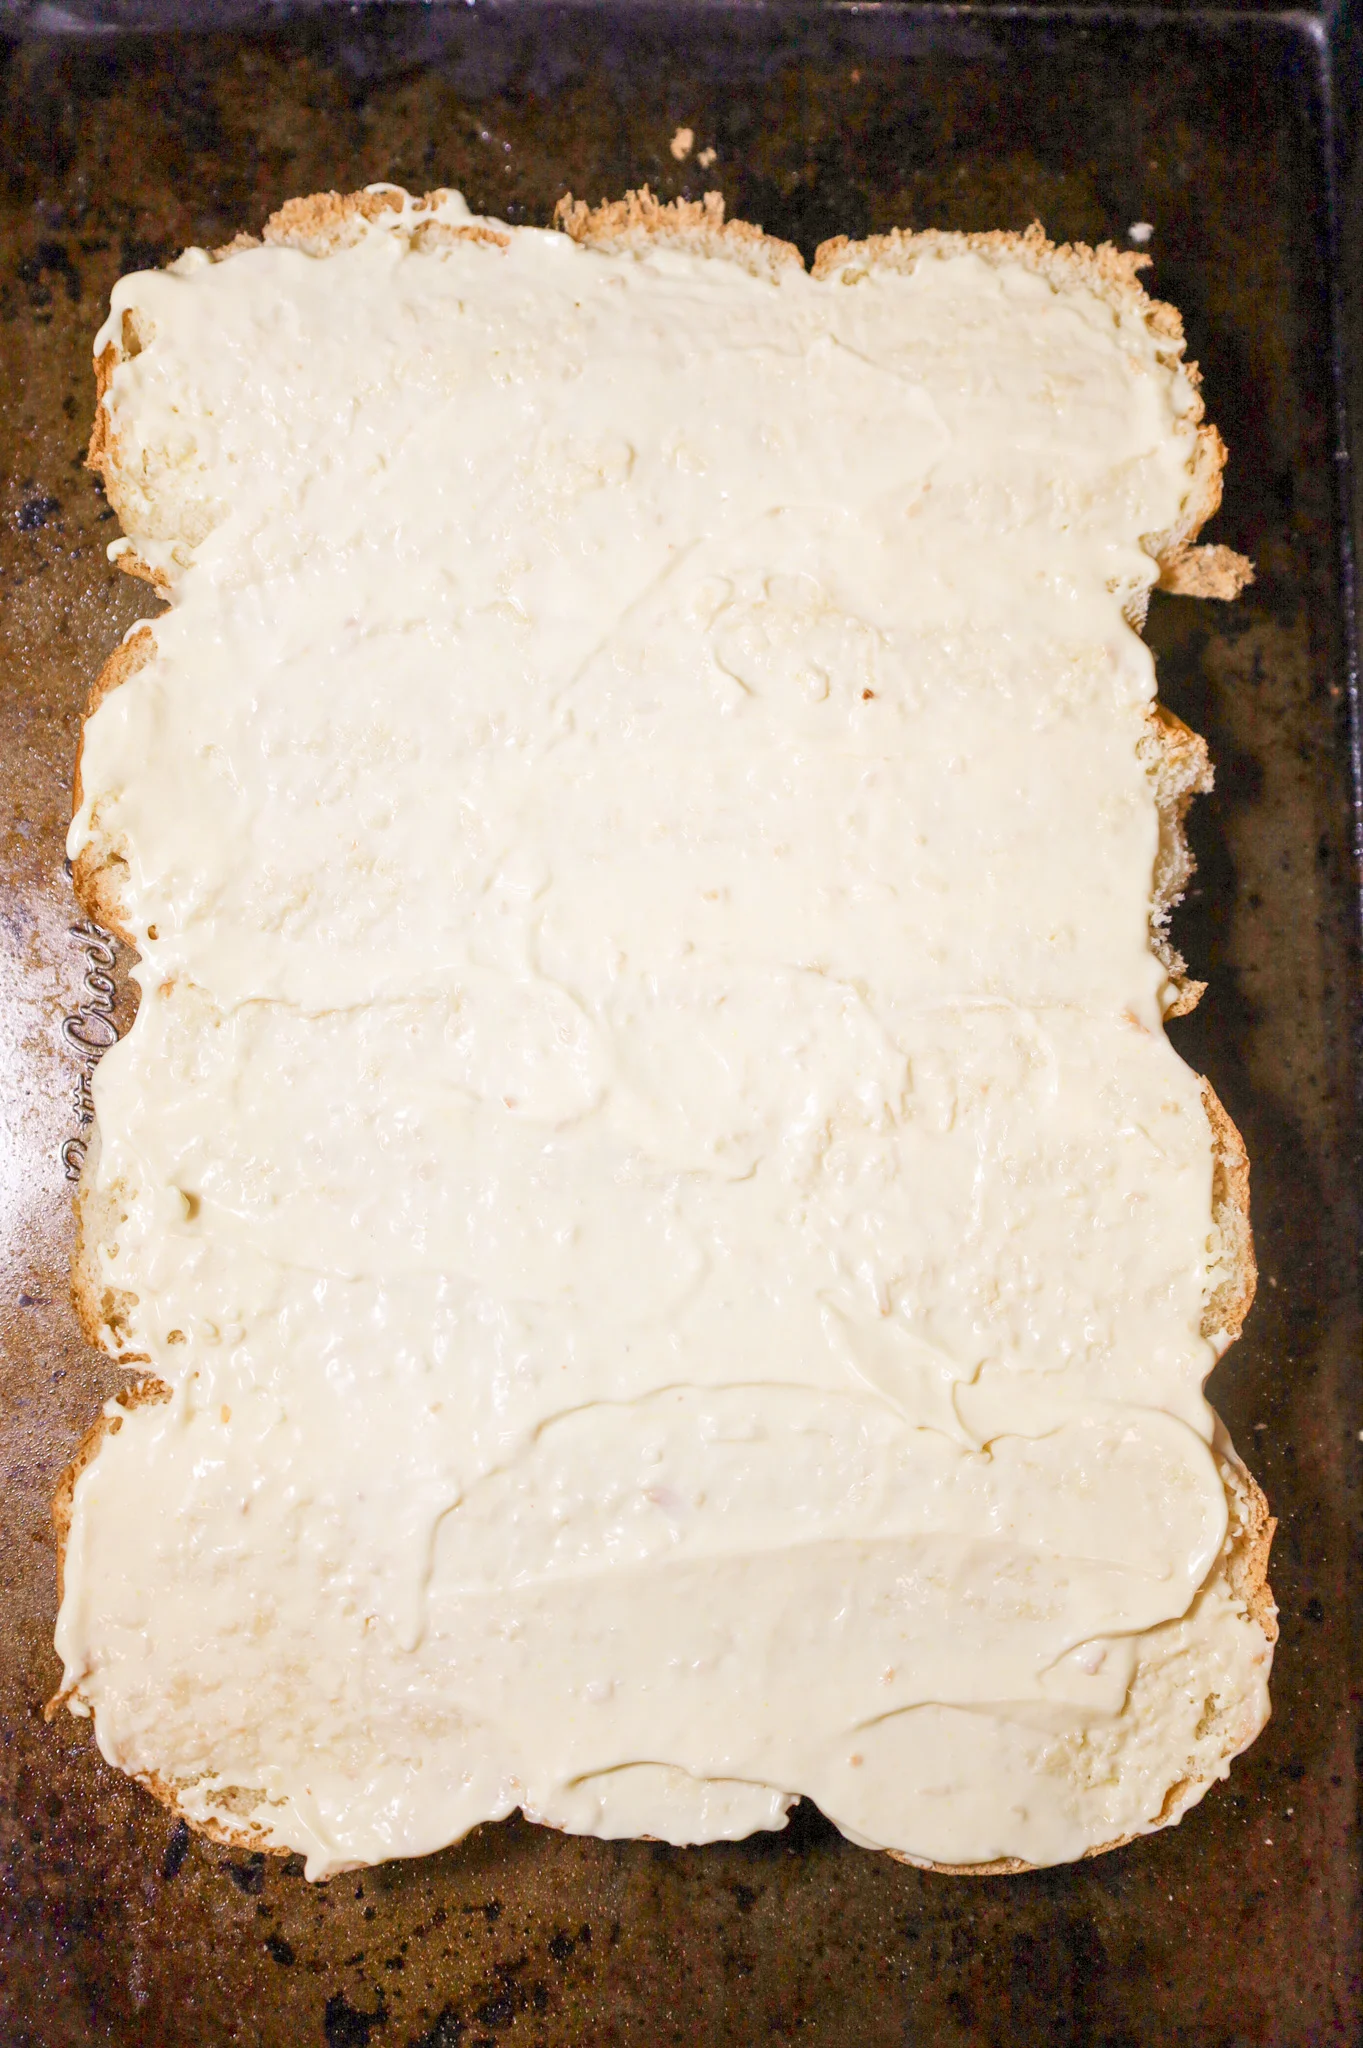 mayo and horseradish sauce mixture spread on bottom buns on a baking sheet